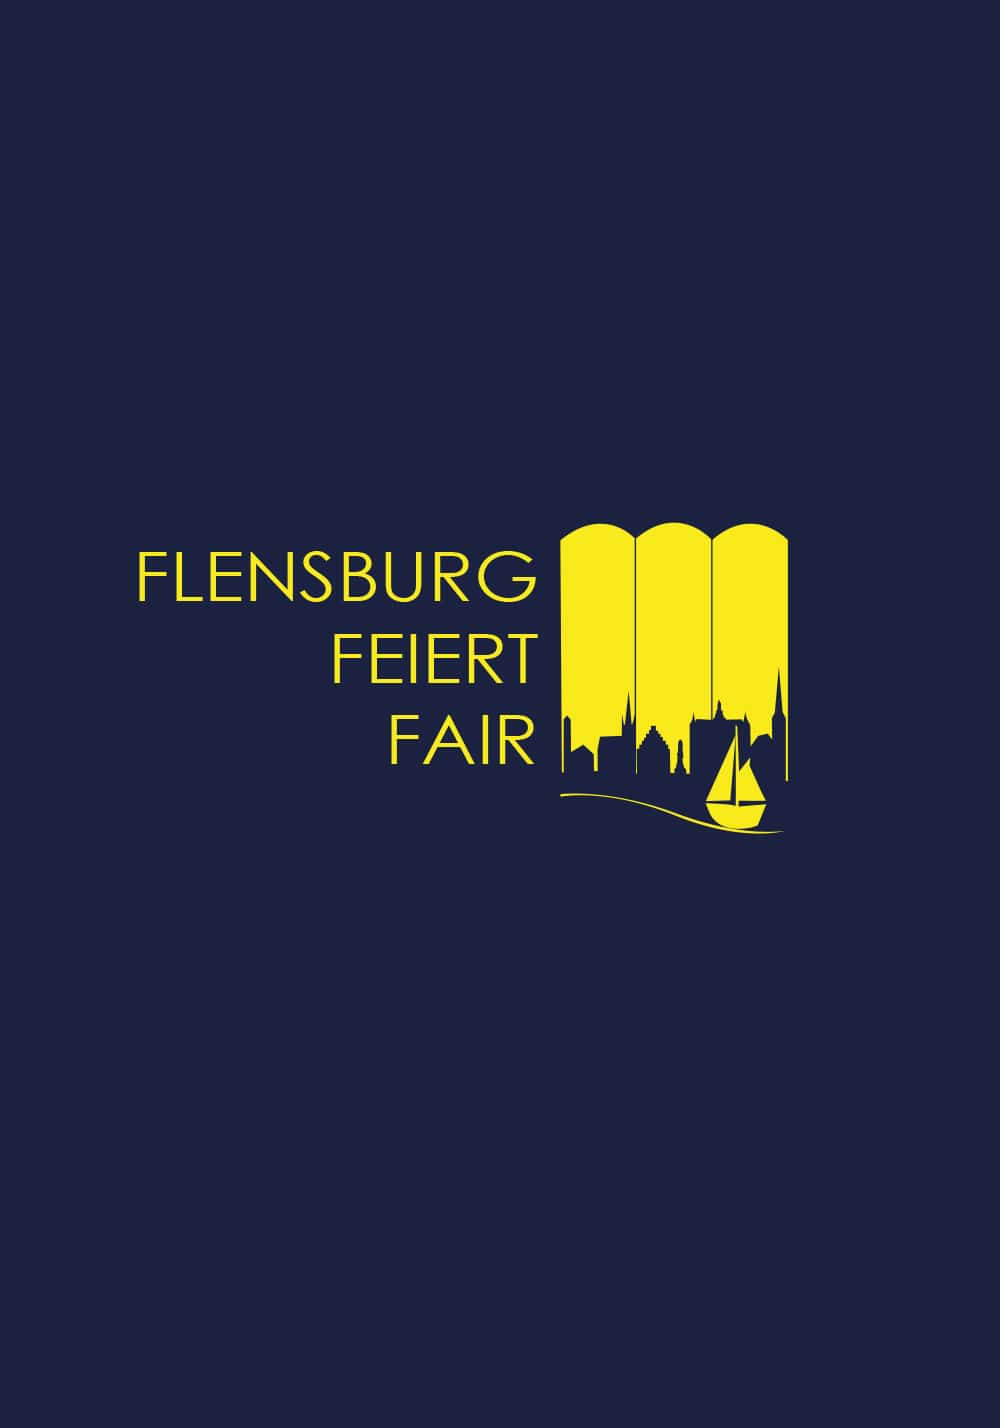 Flensburg feiert fair